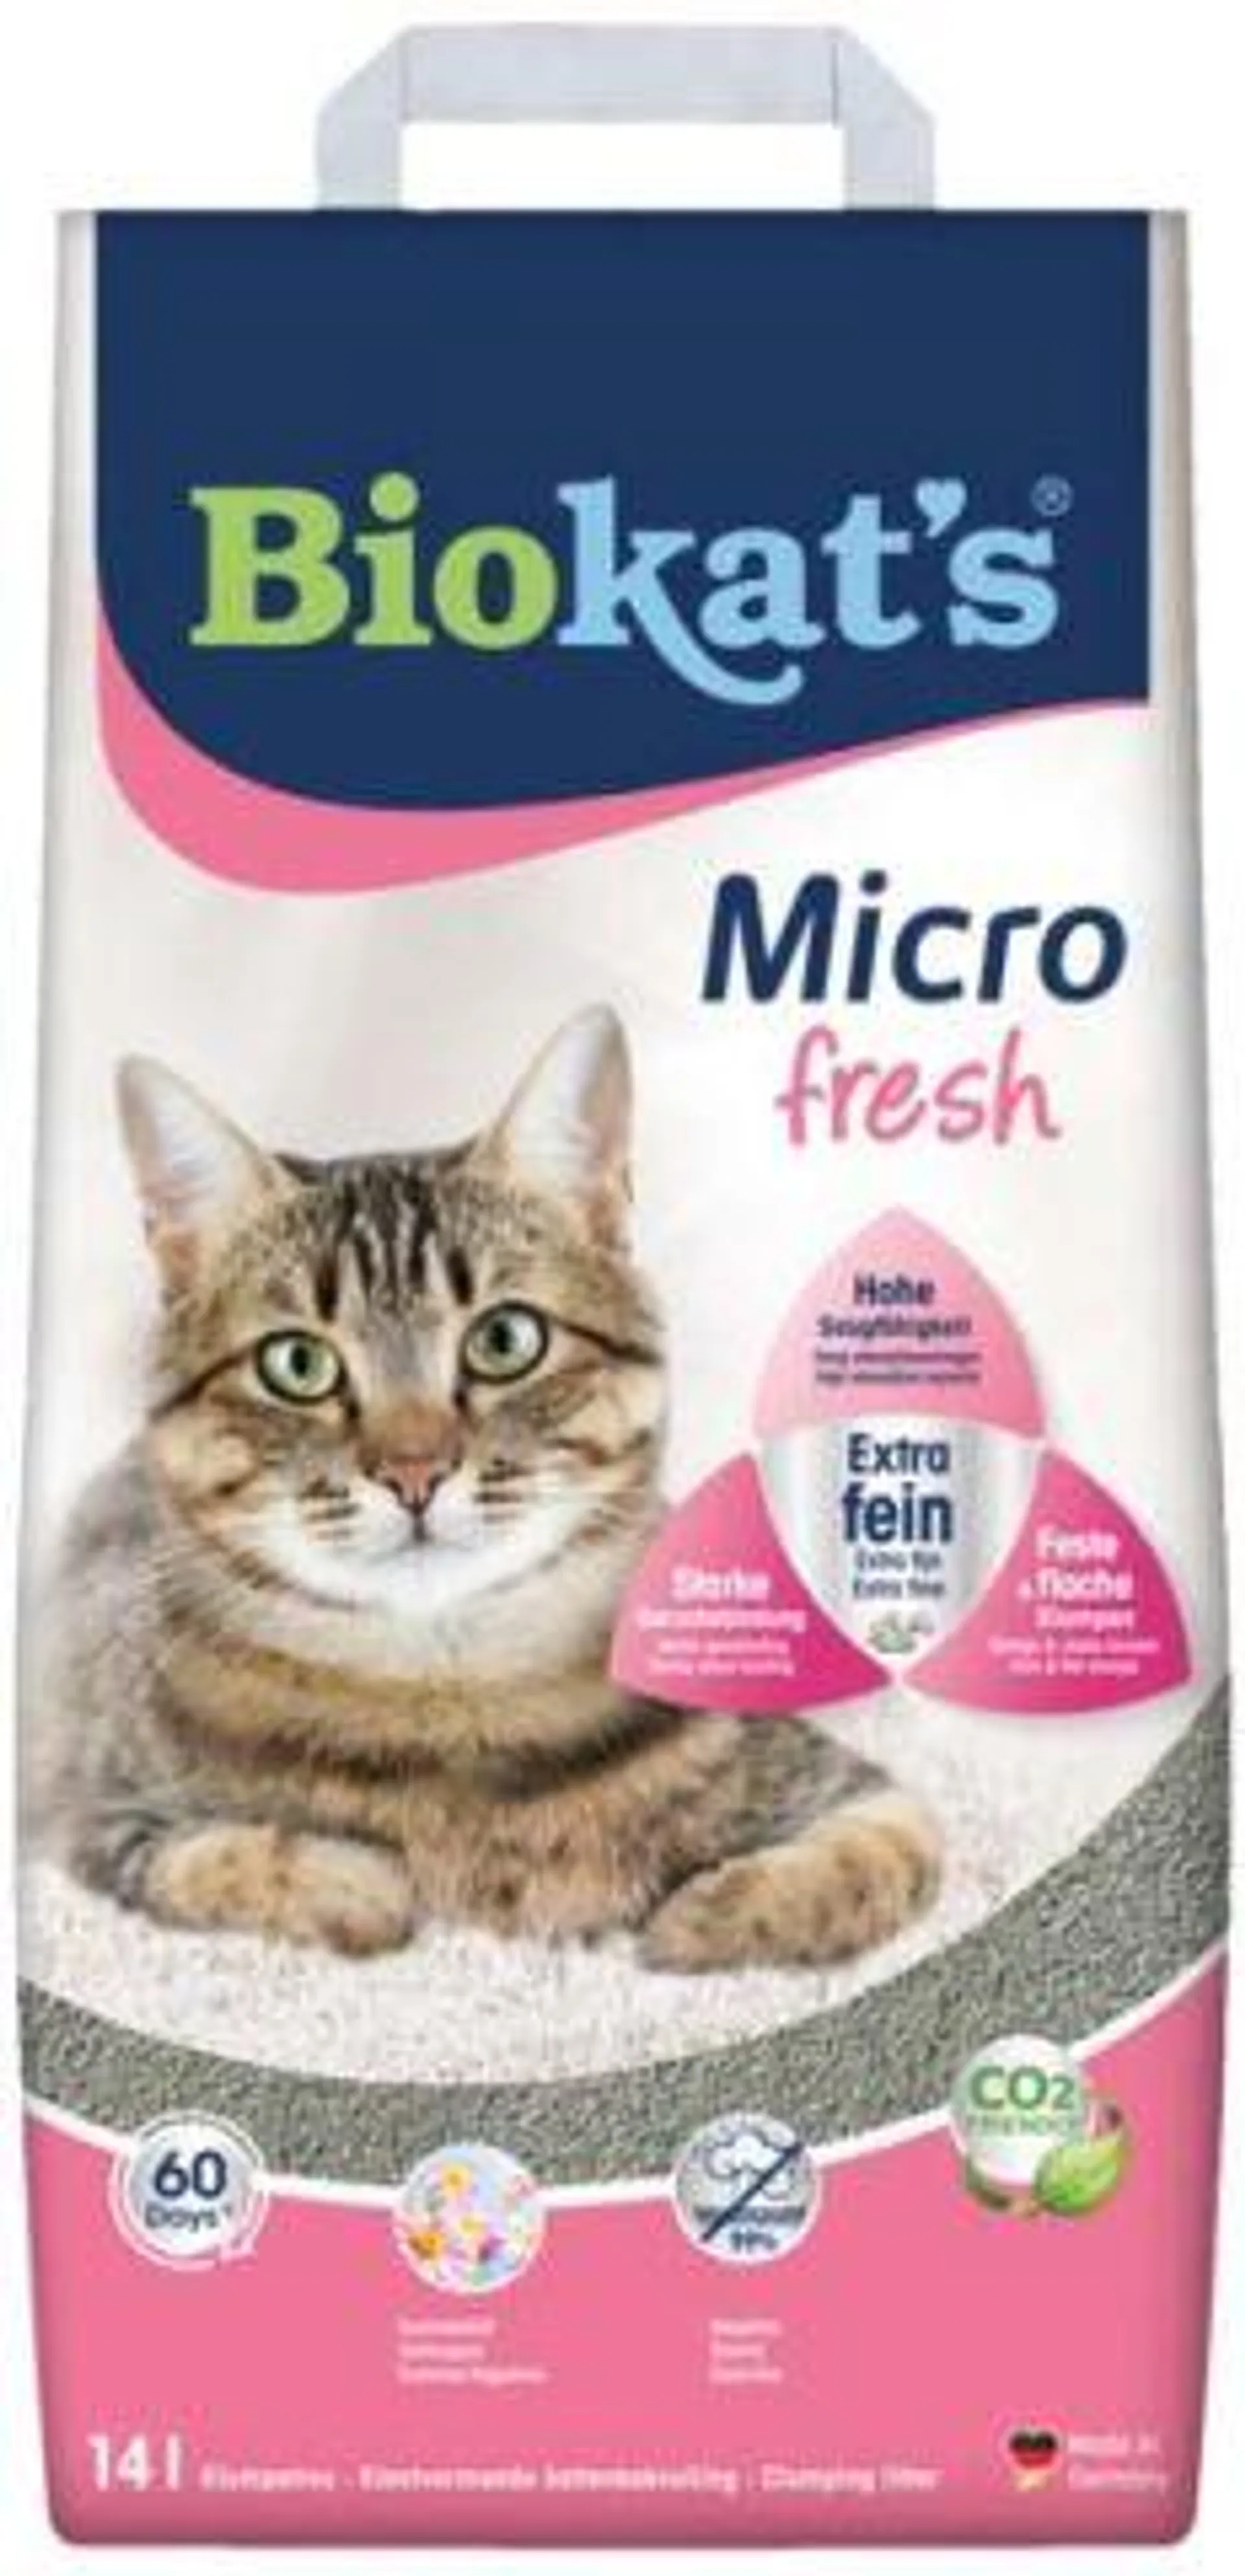 Biokat's Micro Fresh - Kattenbakvulling - Heel fijn - 14 L